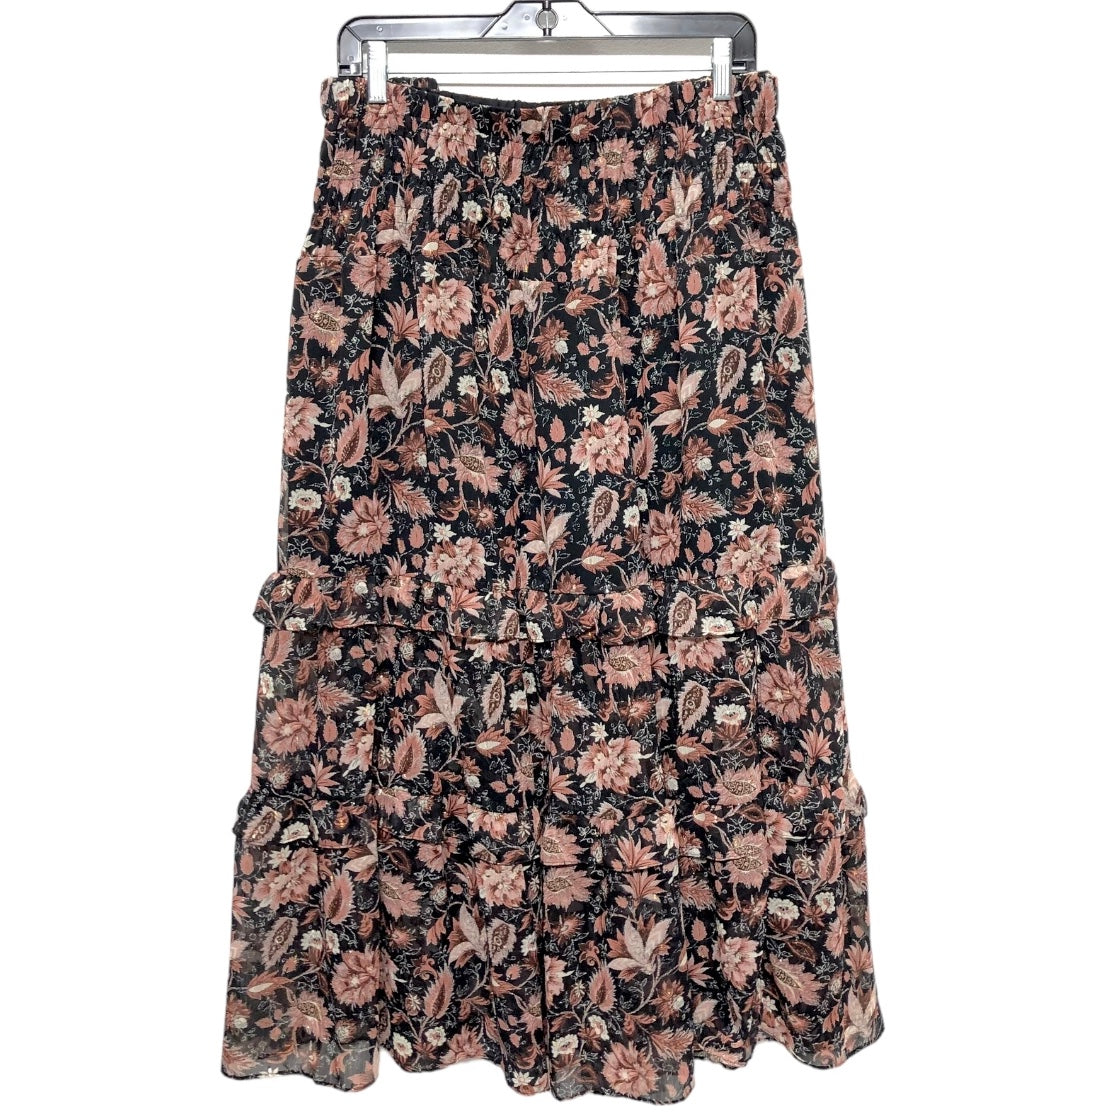 Black & Pink Skirt Midi Madewell, Size 4x